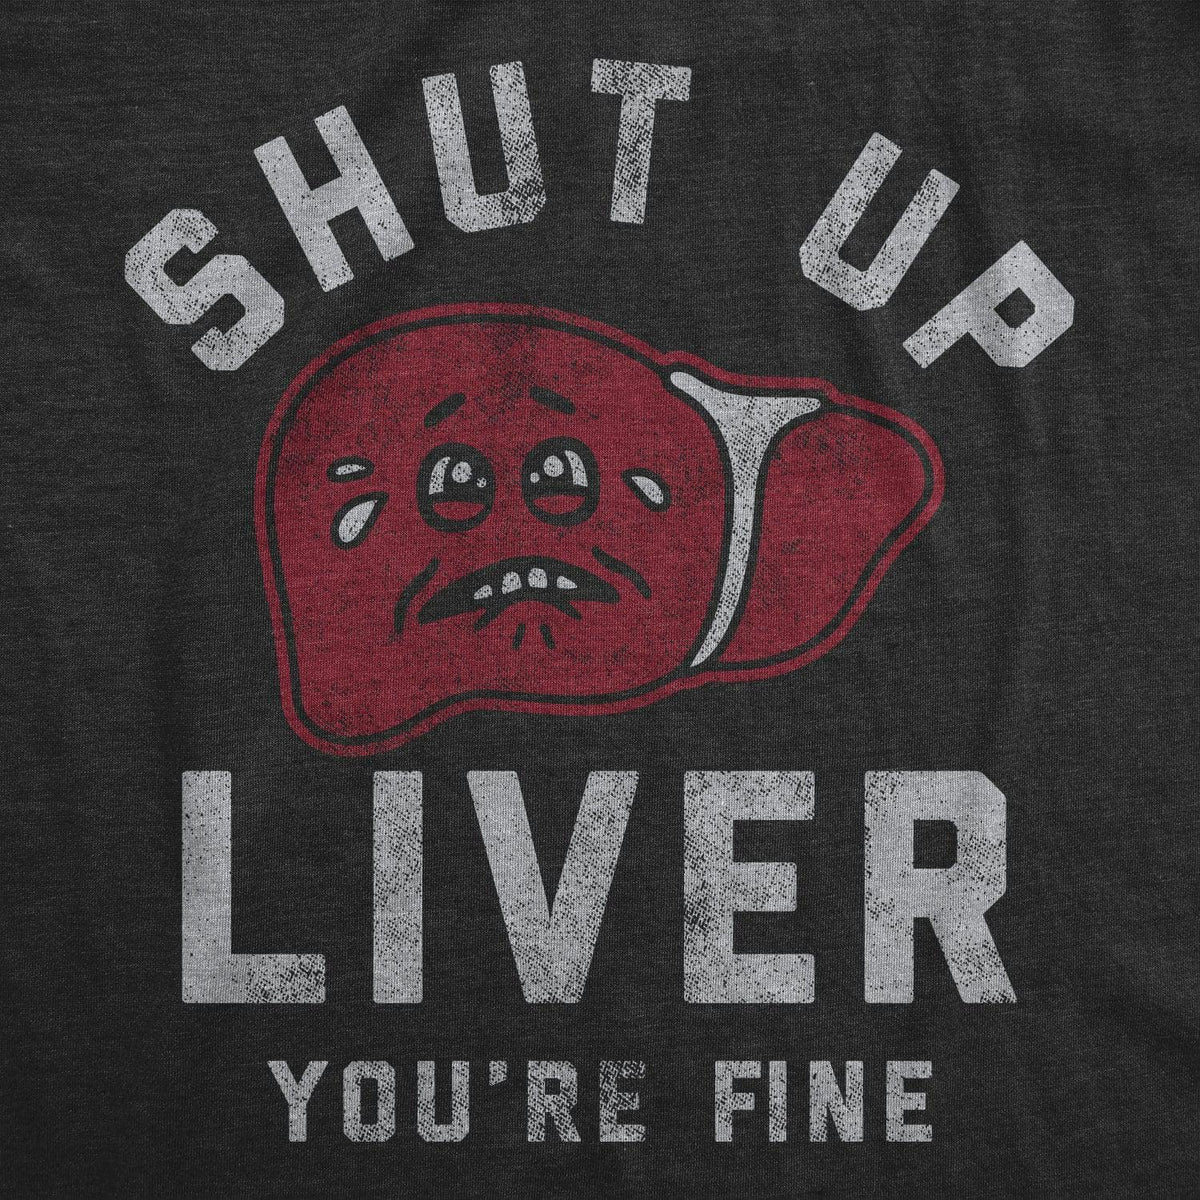 Shut Up Liver Youre Fine Women&#39;s Tshirt  -  Crazy Dog T-Shirts